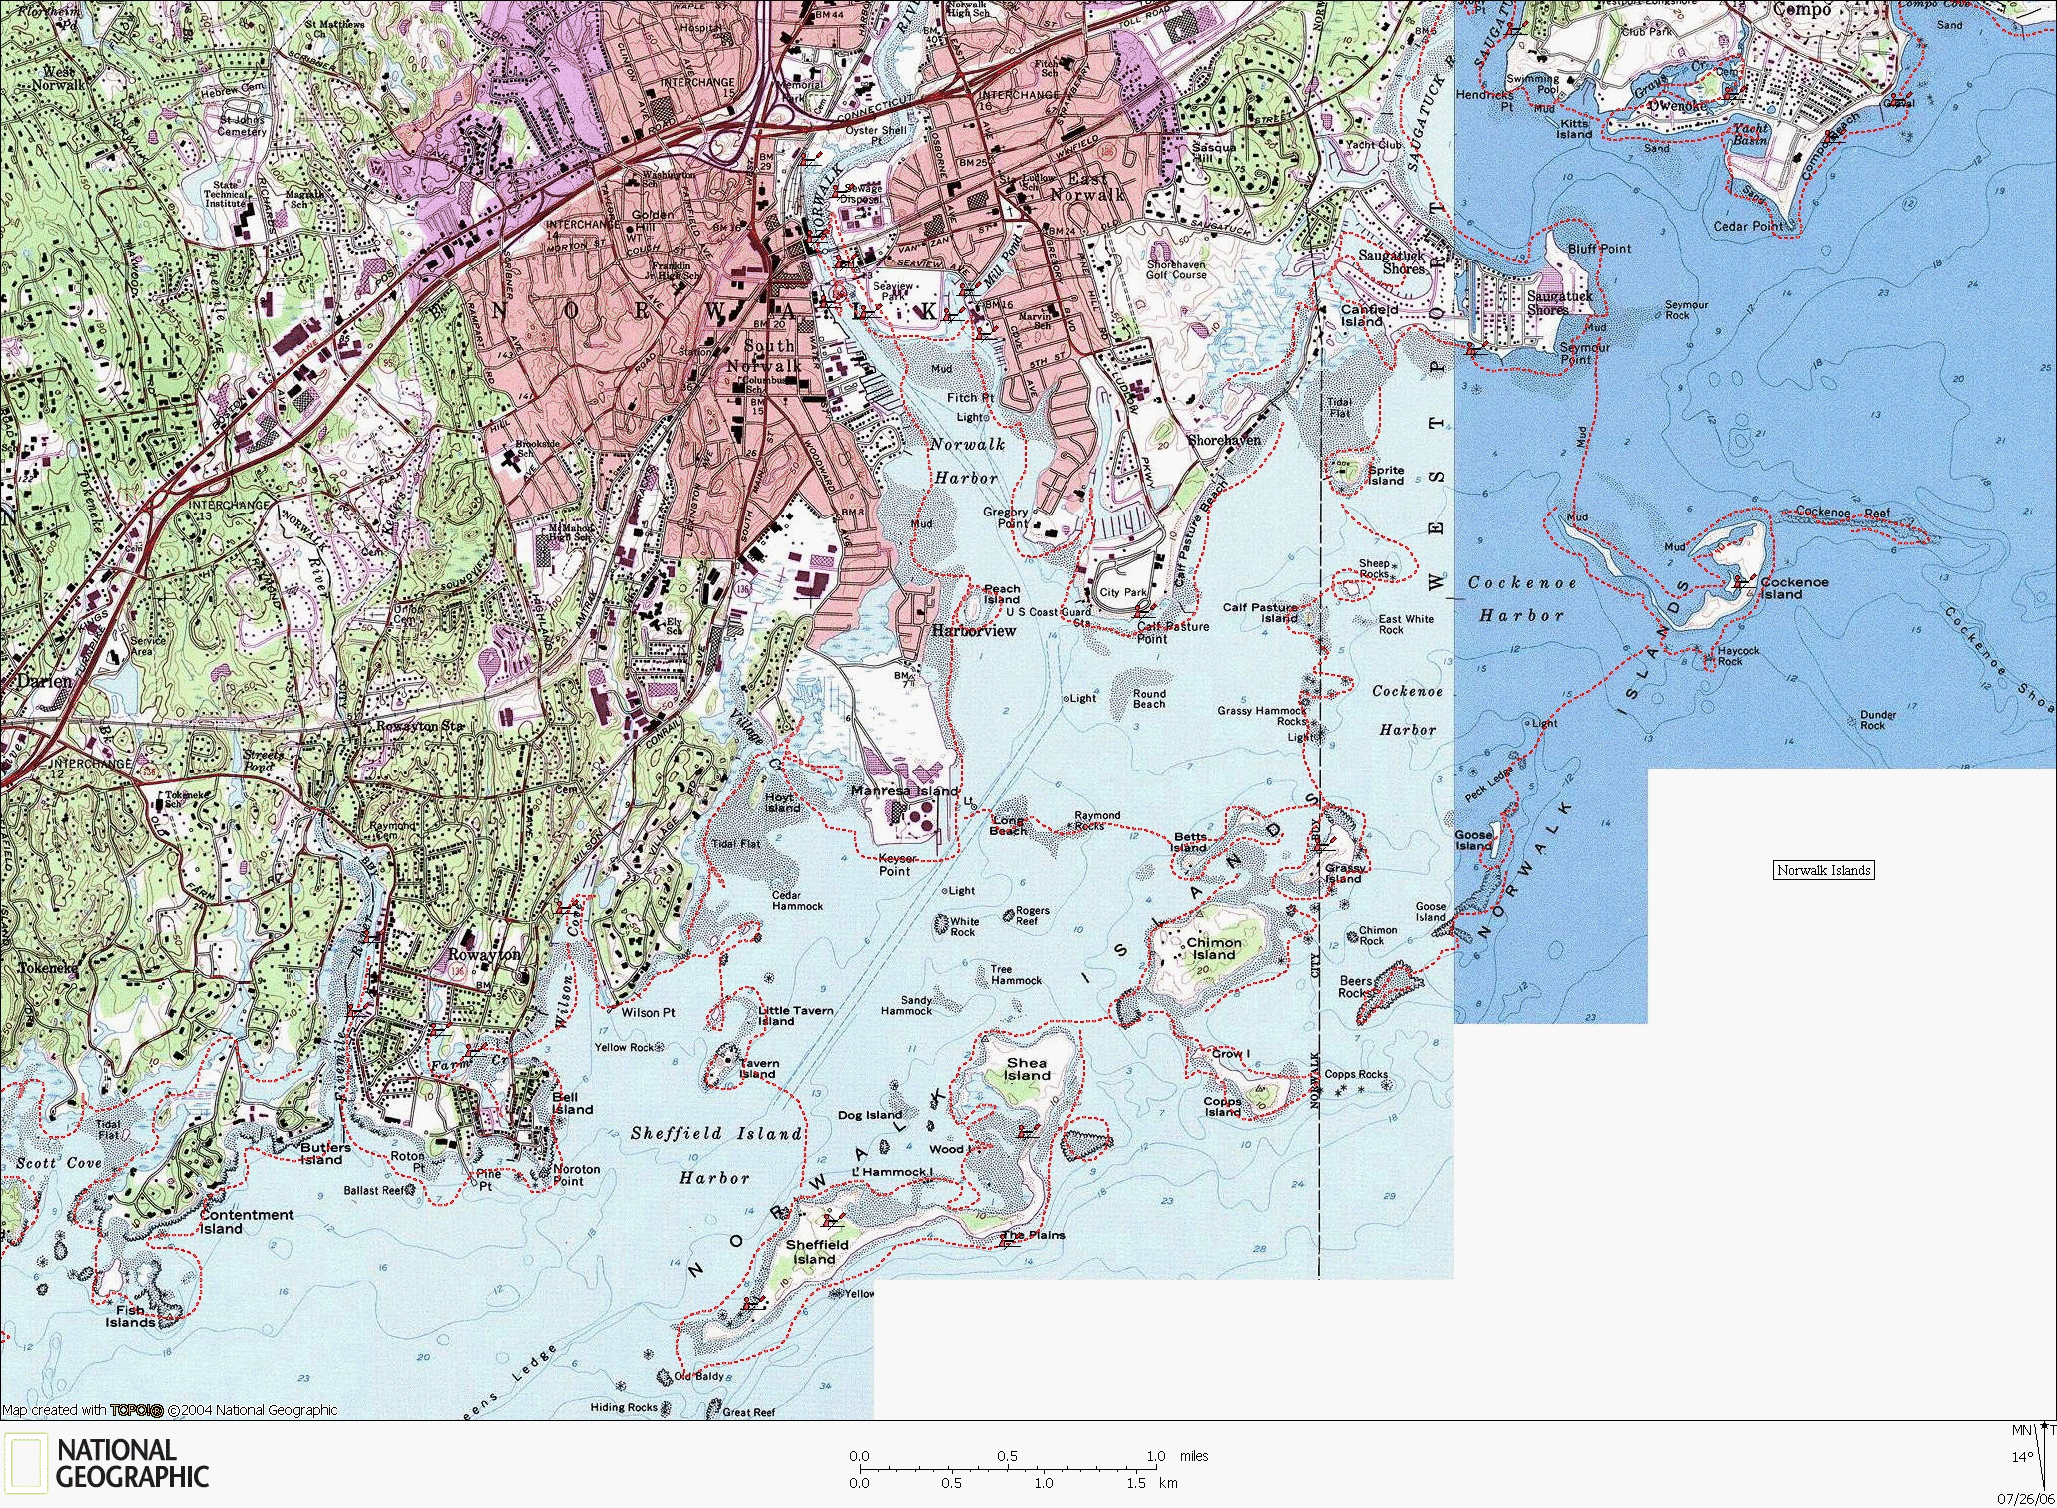 Connecticut, Sea, kayaking, Map, coastal, Long Island Sound, Norwalk islands